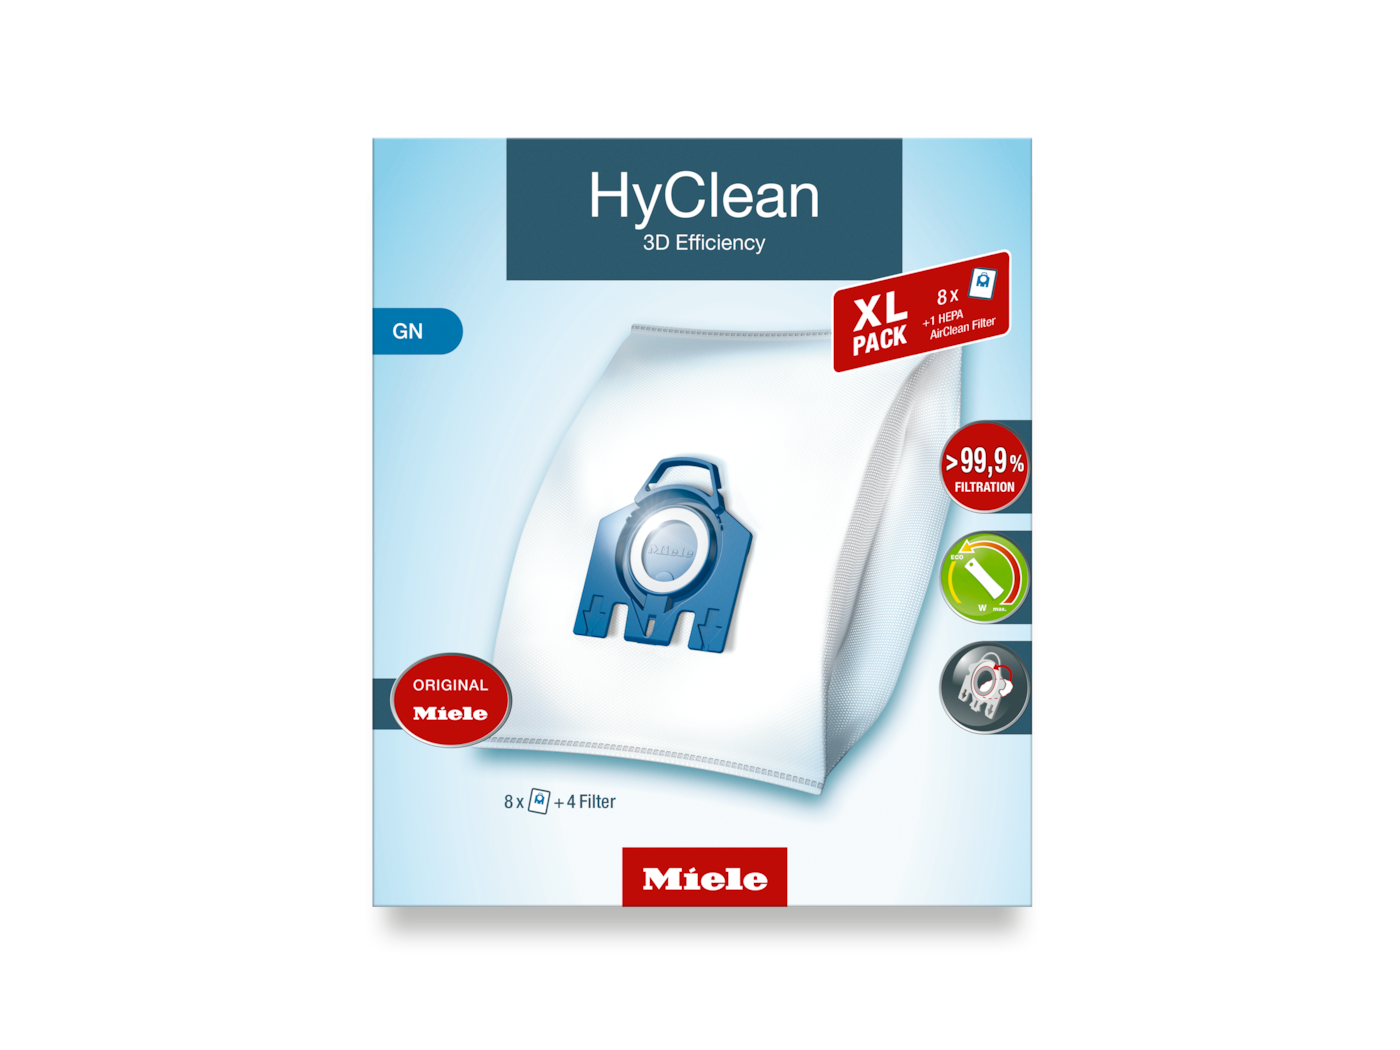 GN Allergy XL HyClean 3D - Комплект мешков-пылесборников Allergy XL Pack HyClean 3D Efficiency GN 